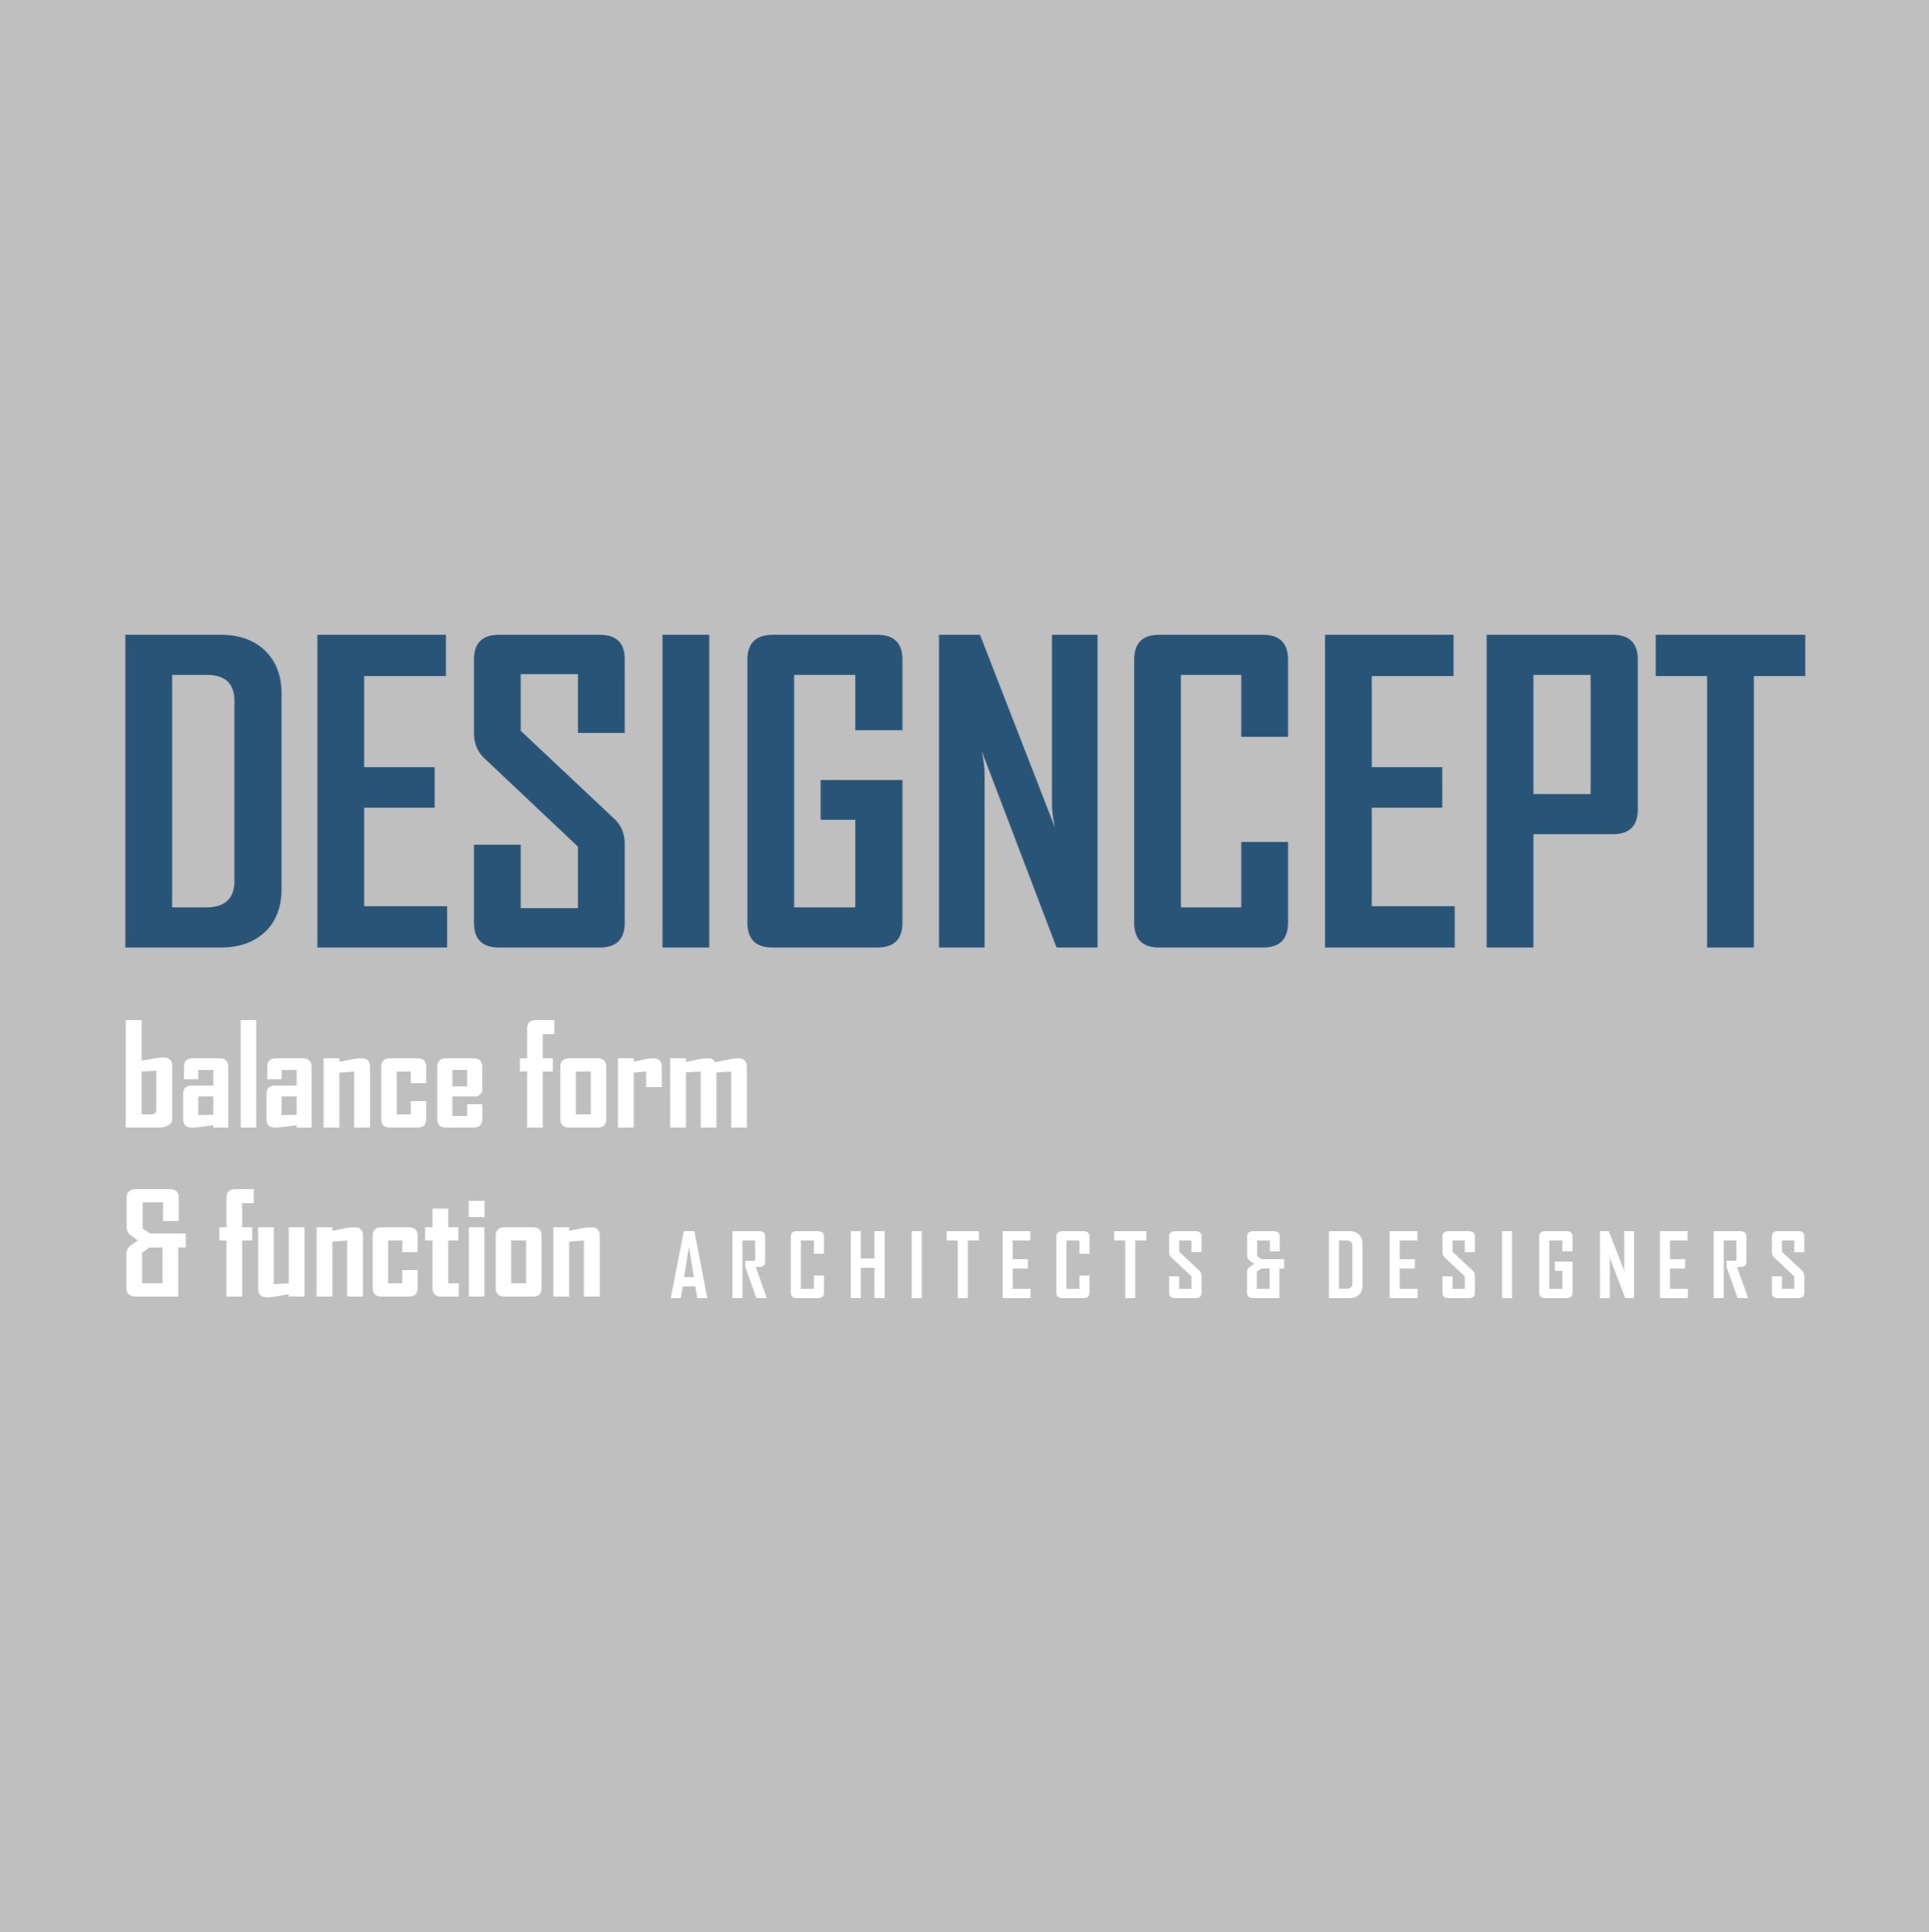 The Designcept